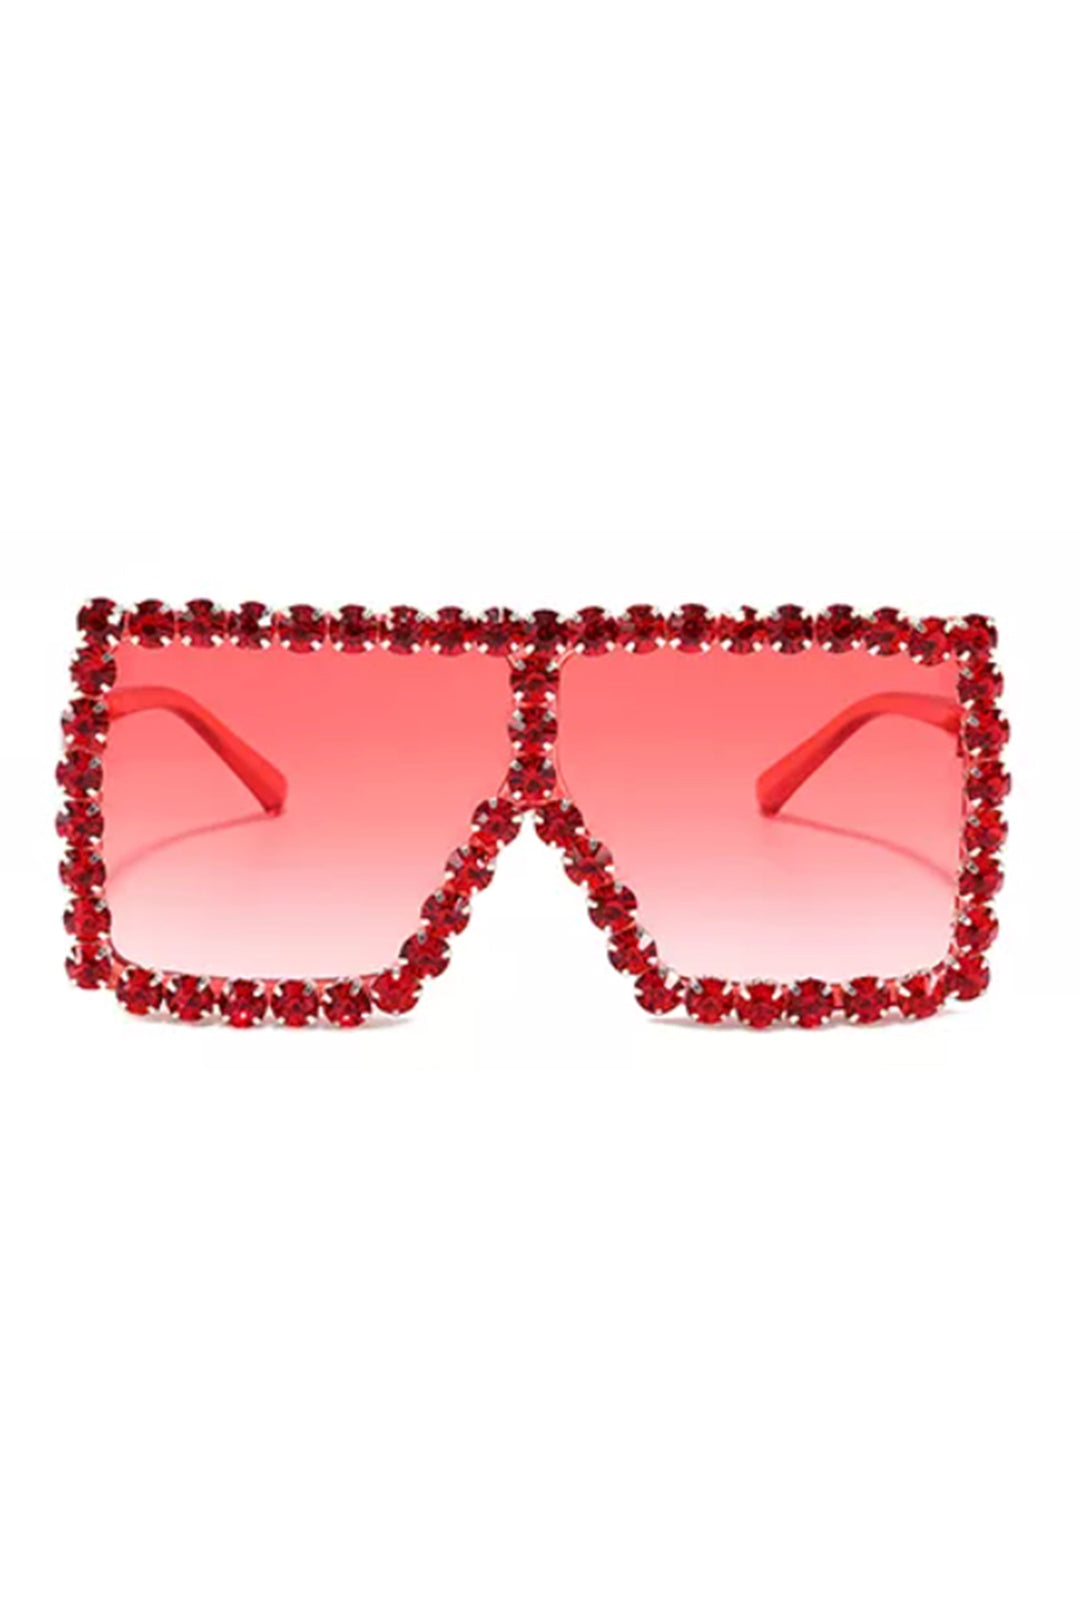 Fashion Red Rhinestone Frame Glasses